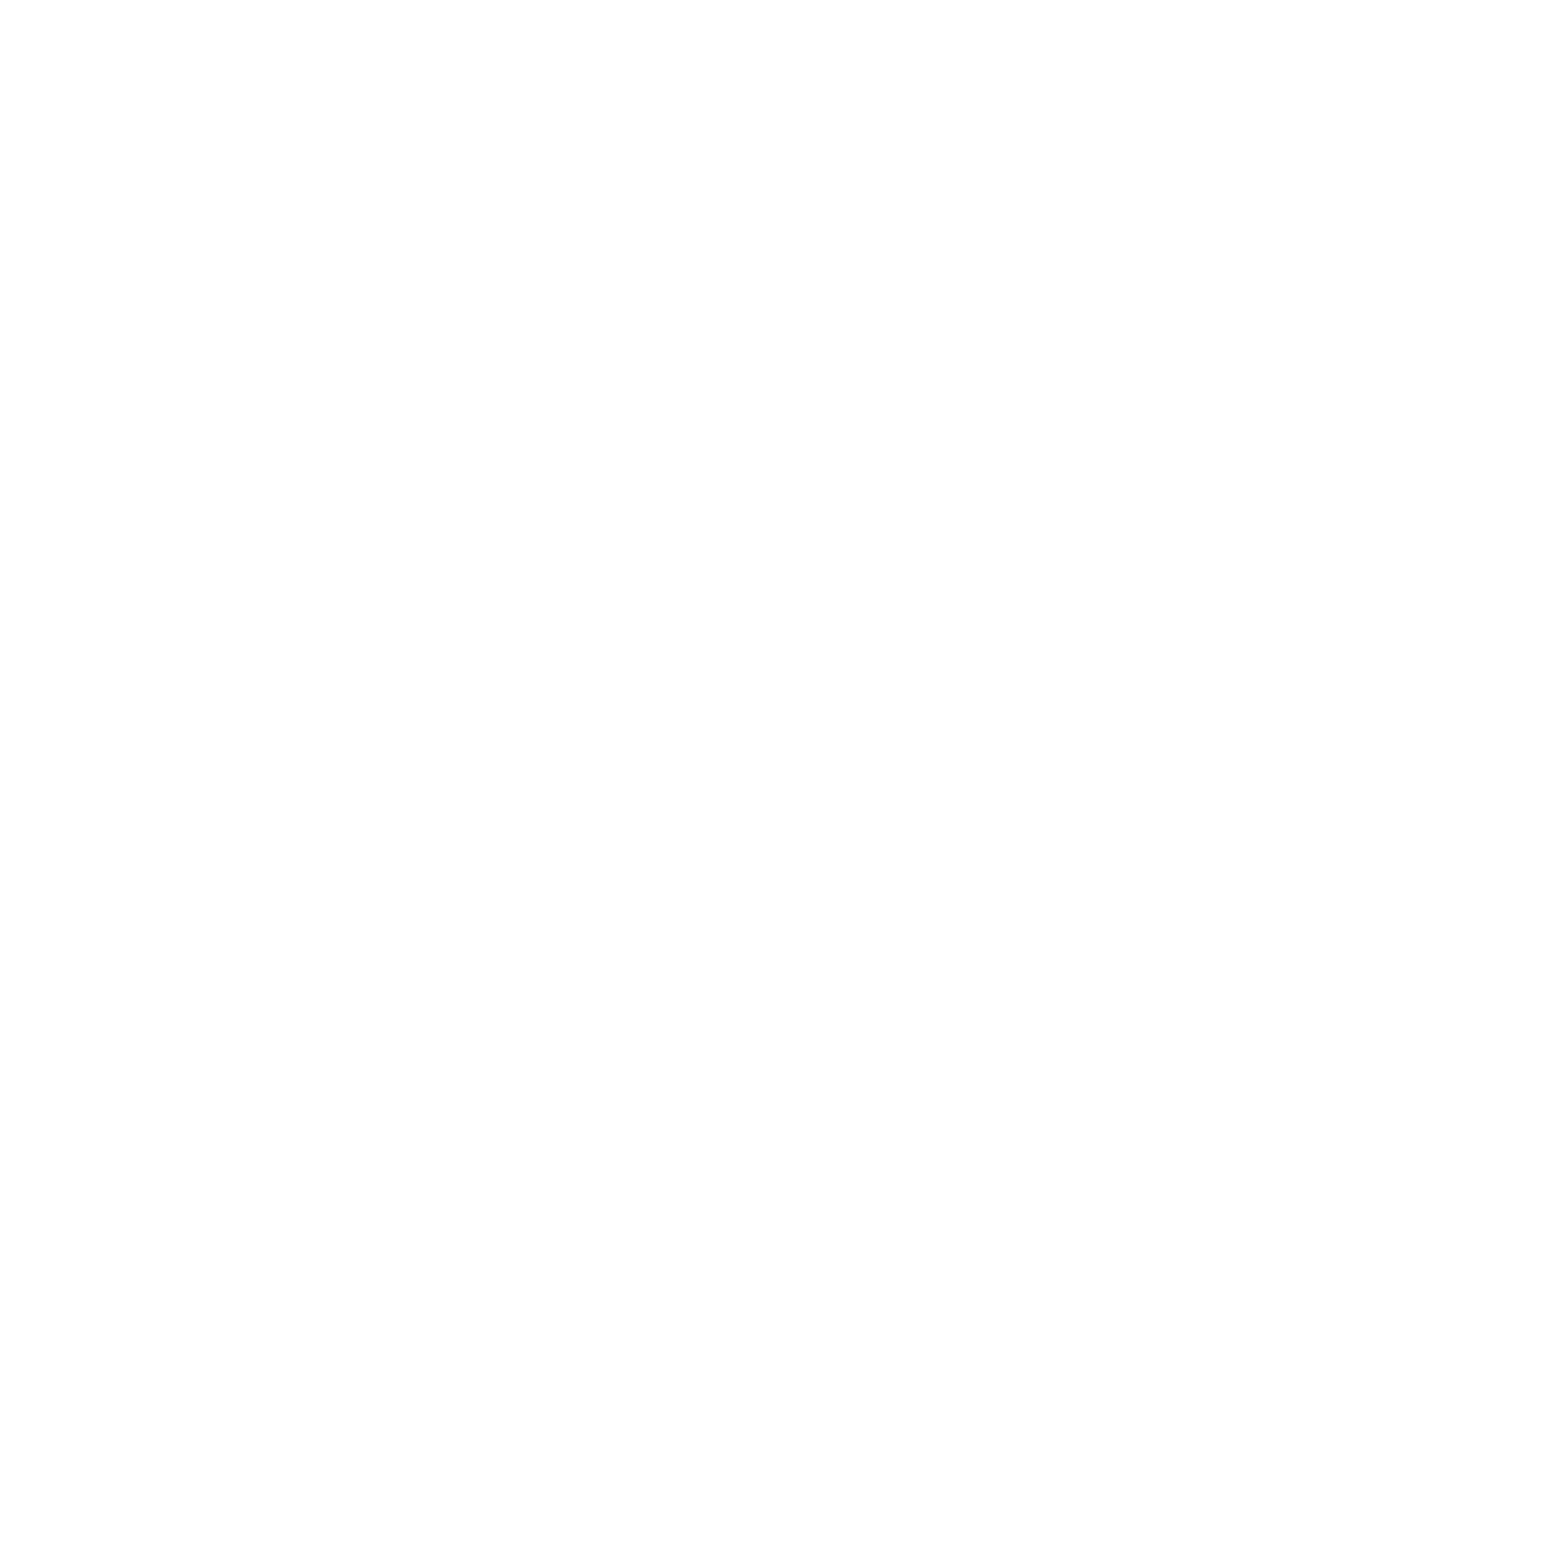 Jehangir Associates